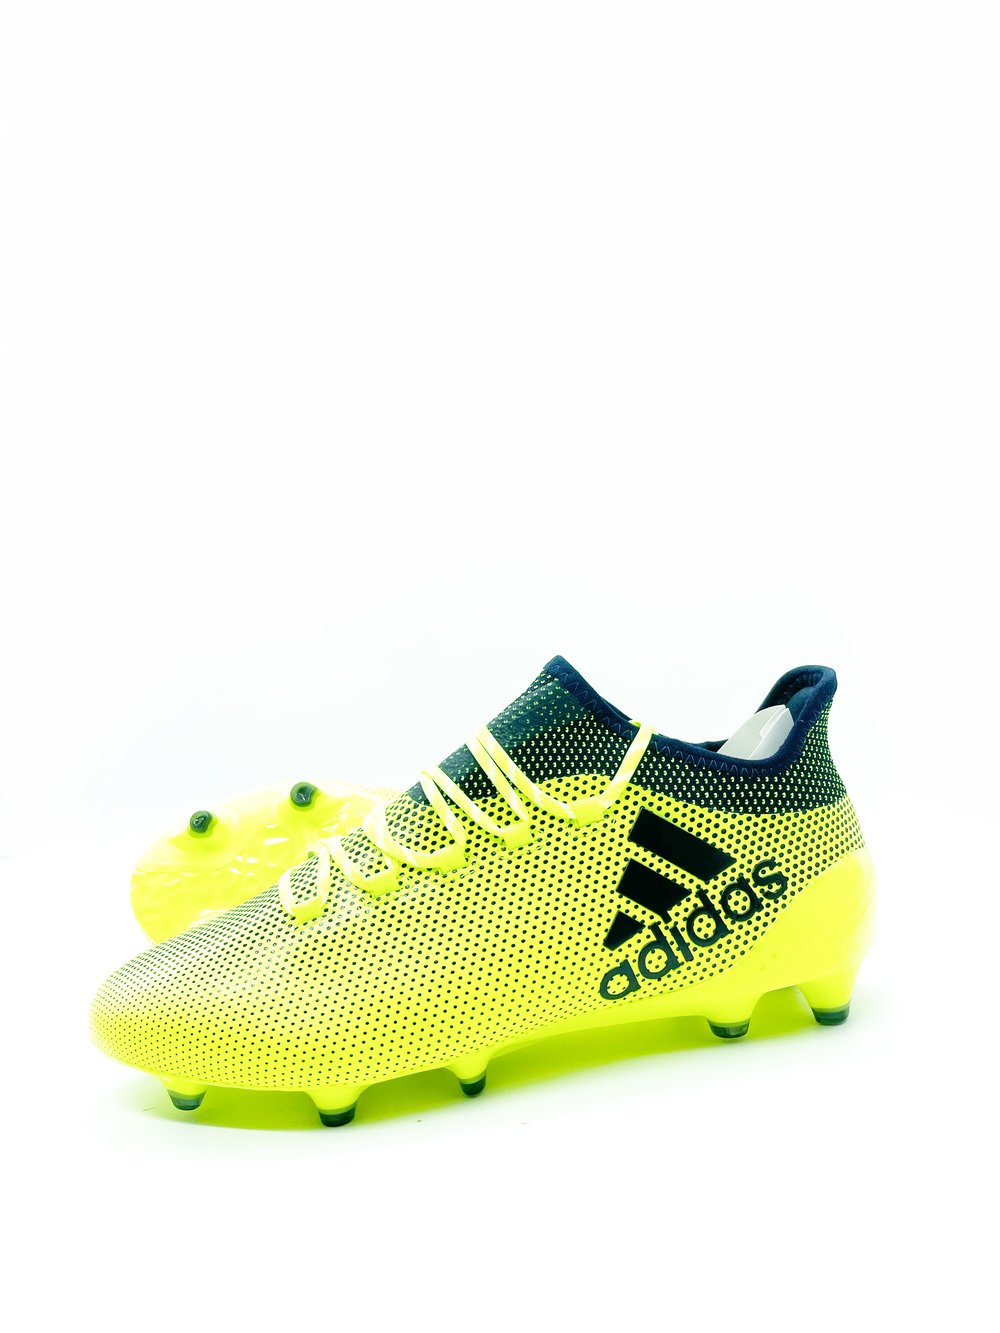 Image of Adidas 17.1 FG yellow 